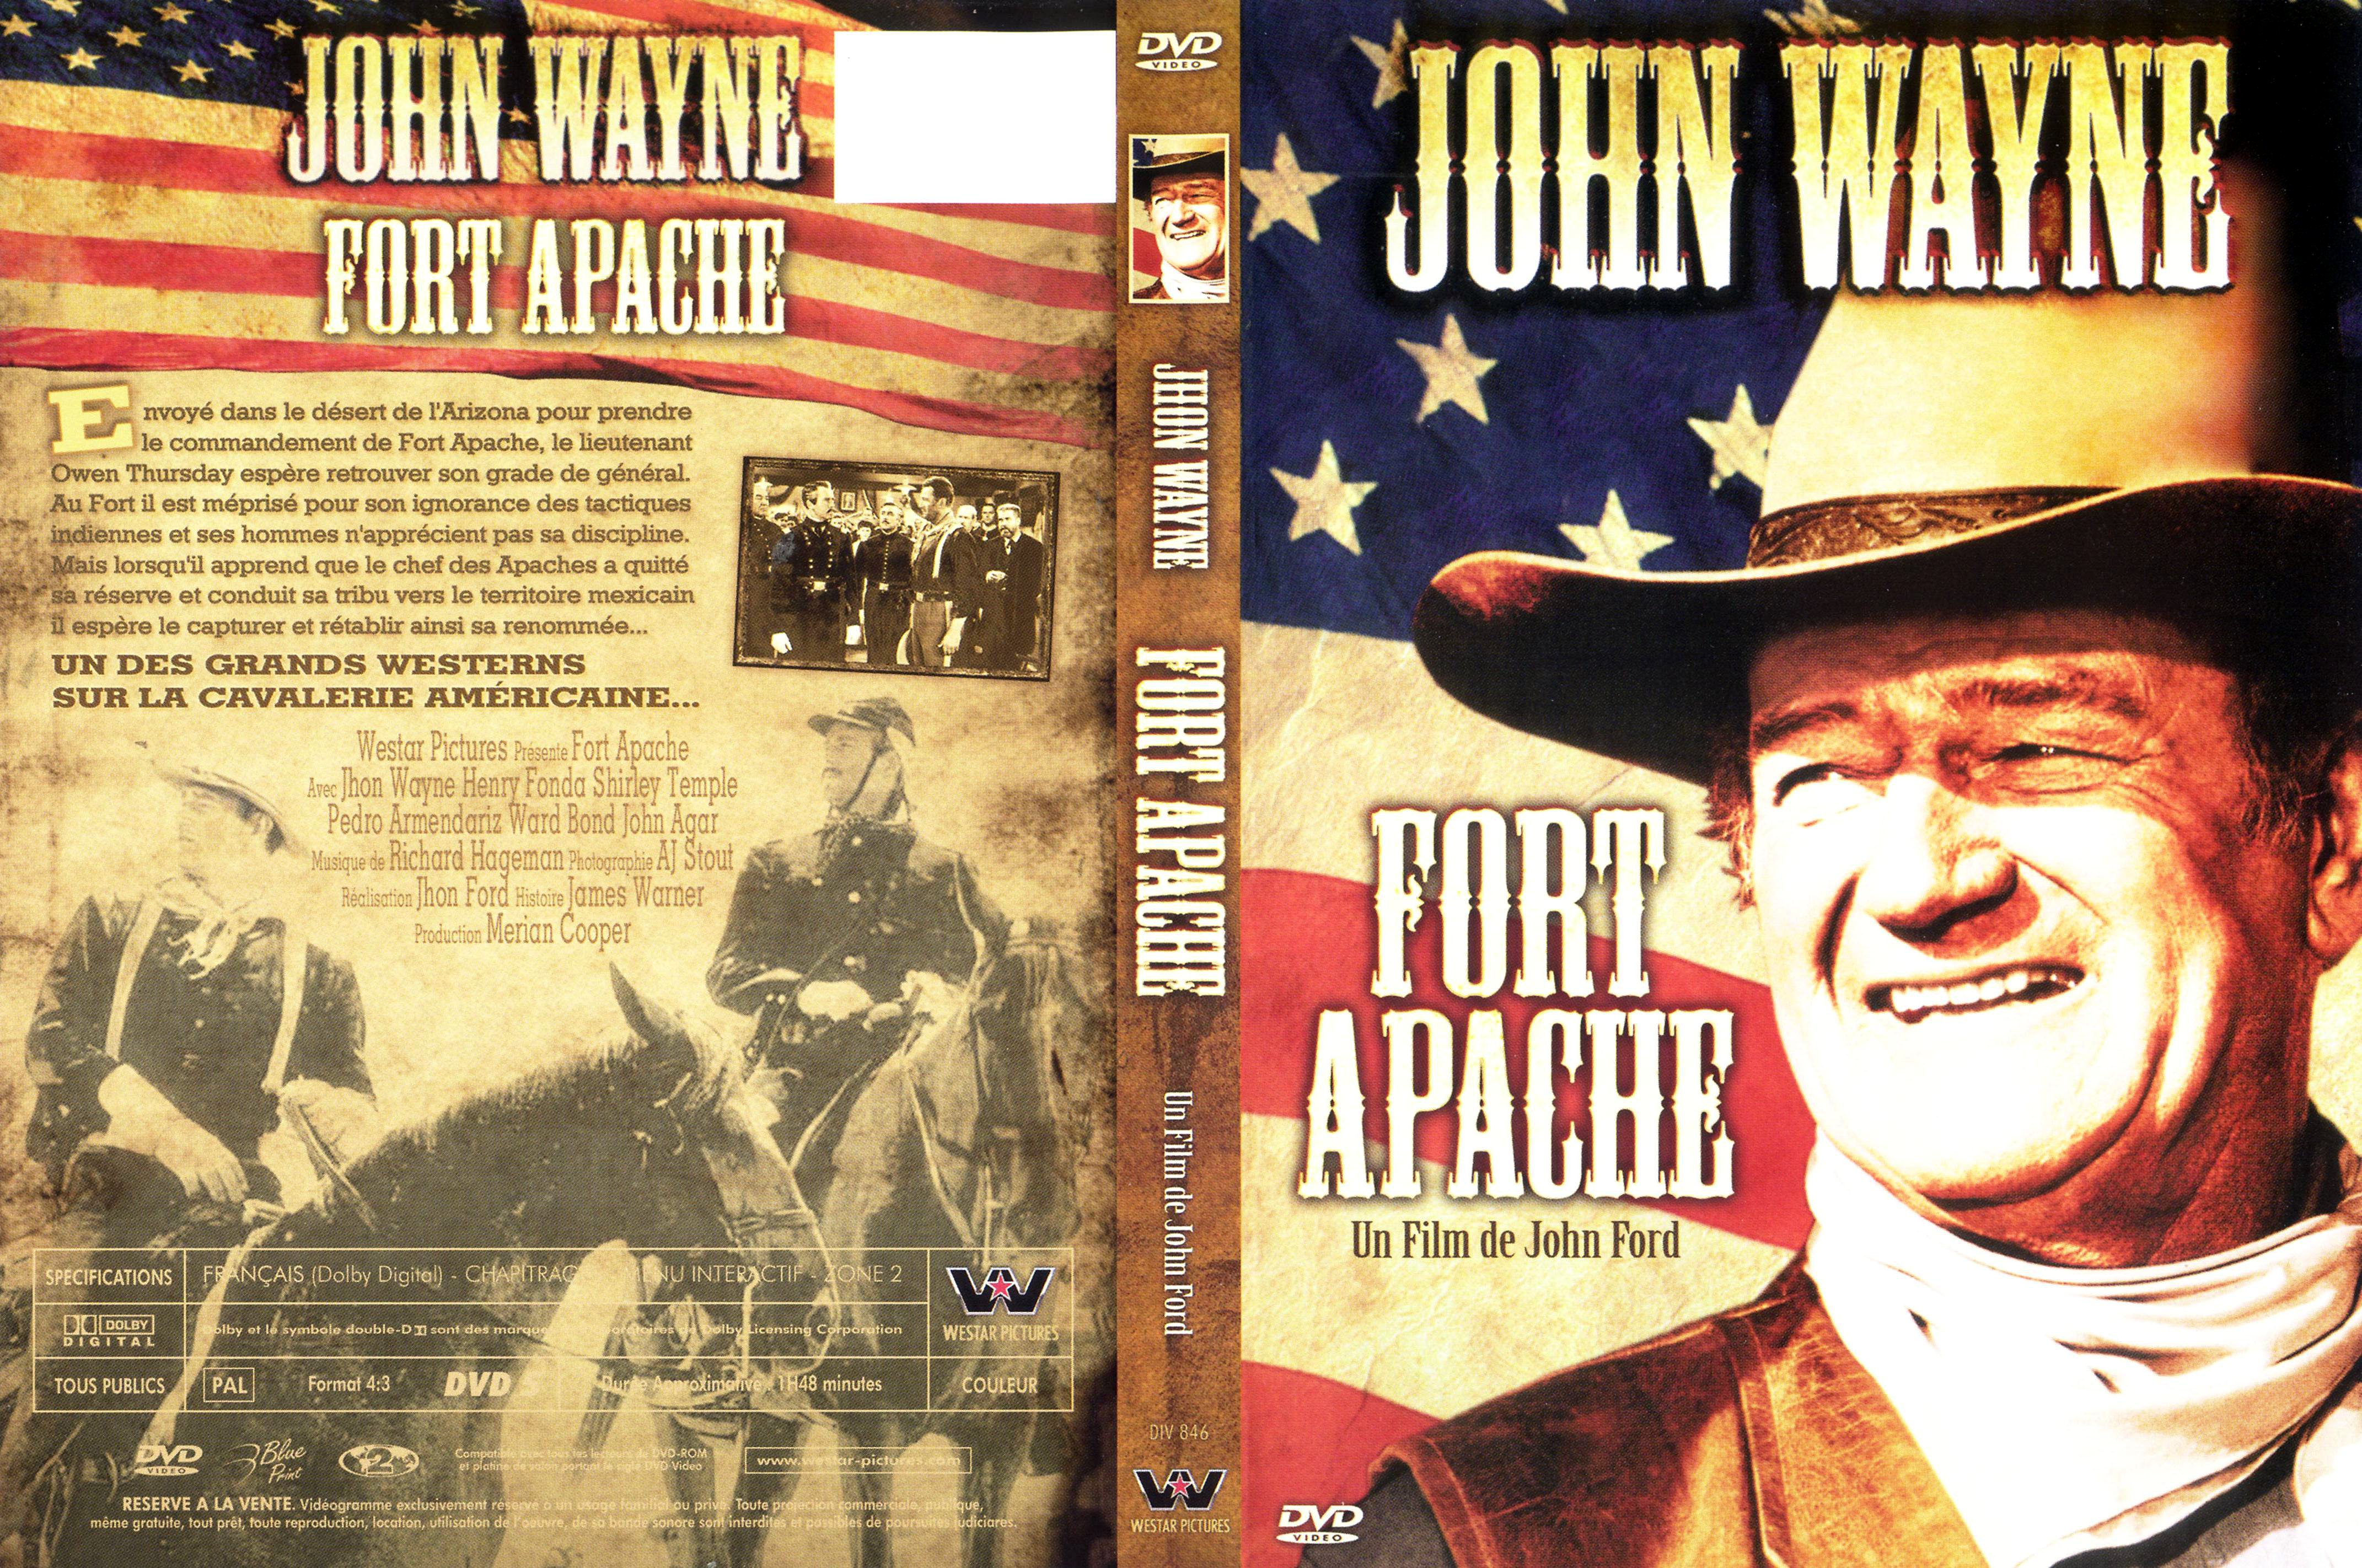 Jaquette DVD Fort apache